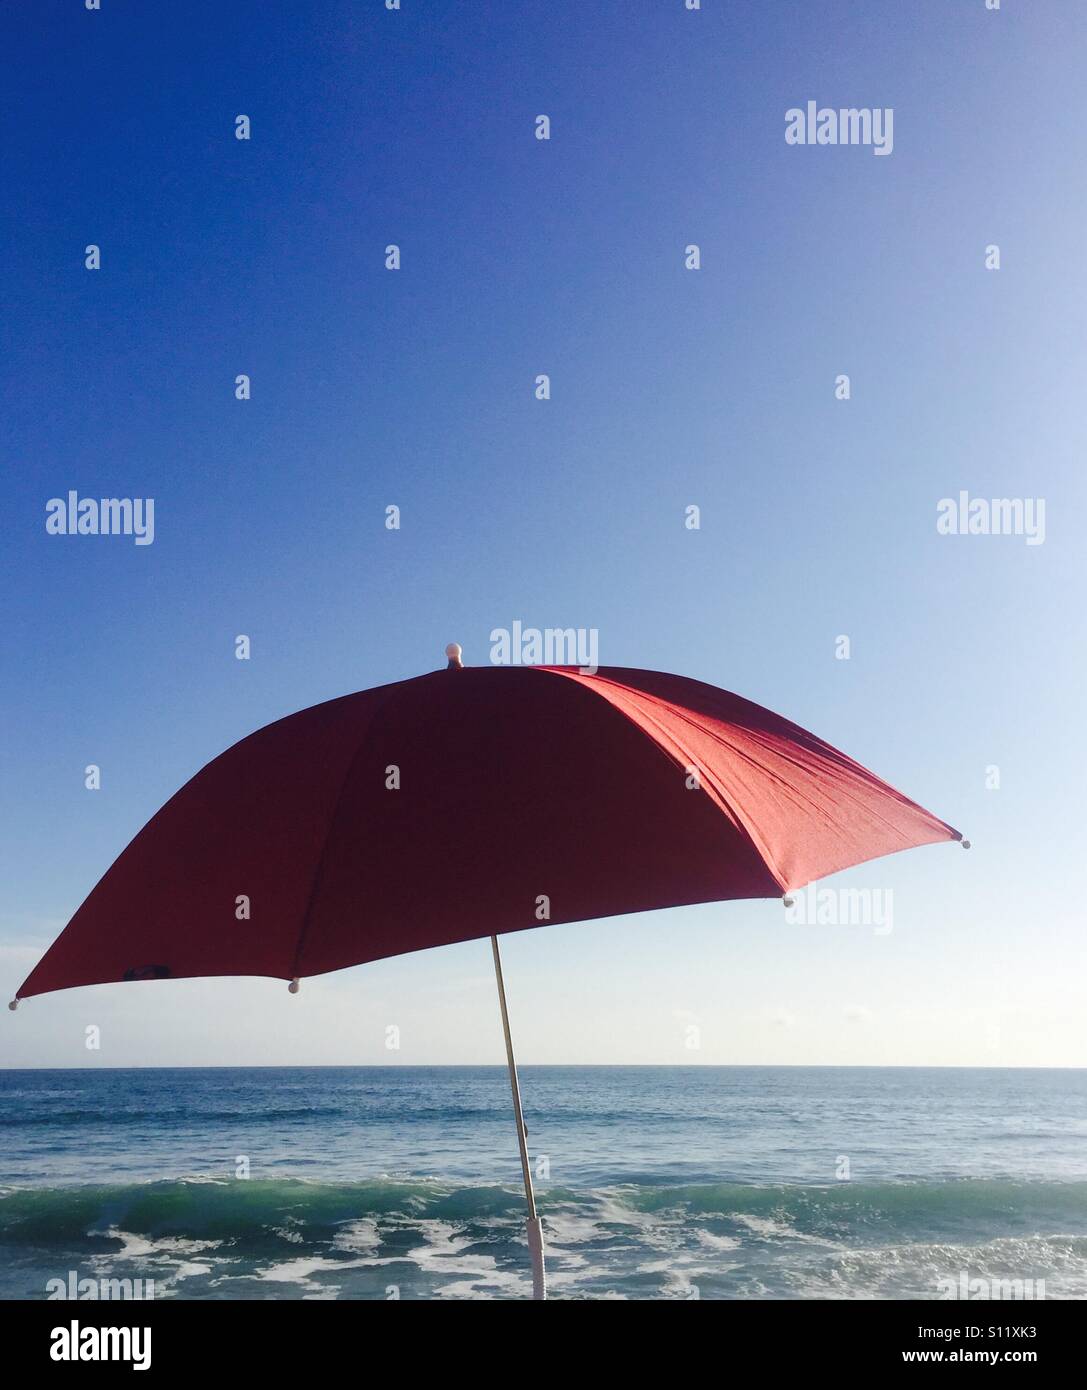 A single red umbrella and the ocean and sky. Ventura, California USA. Stock Photo